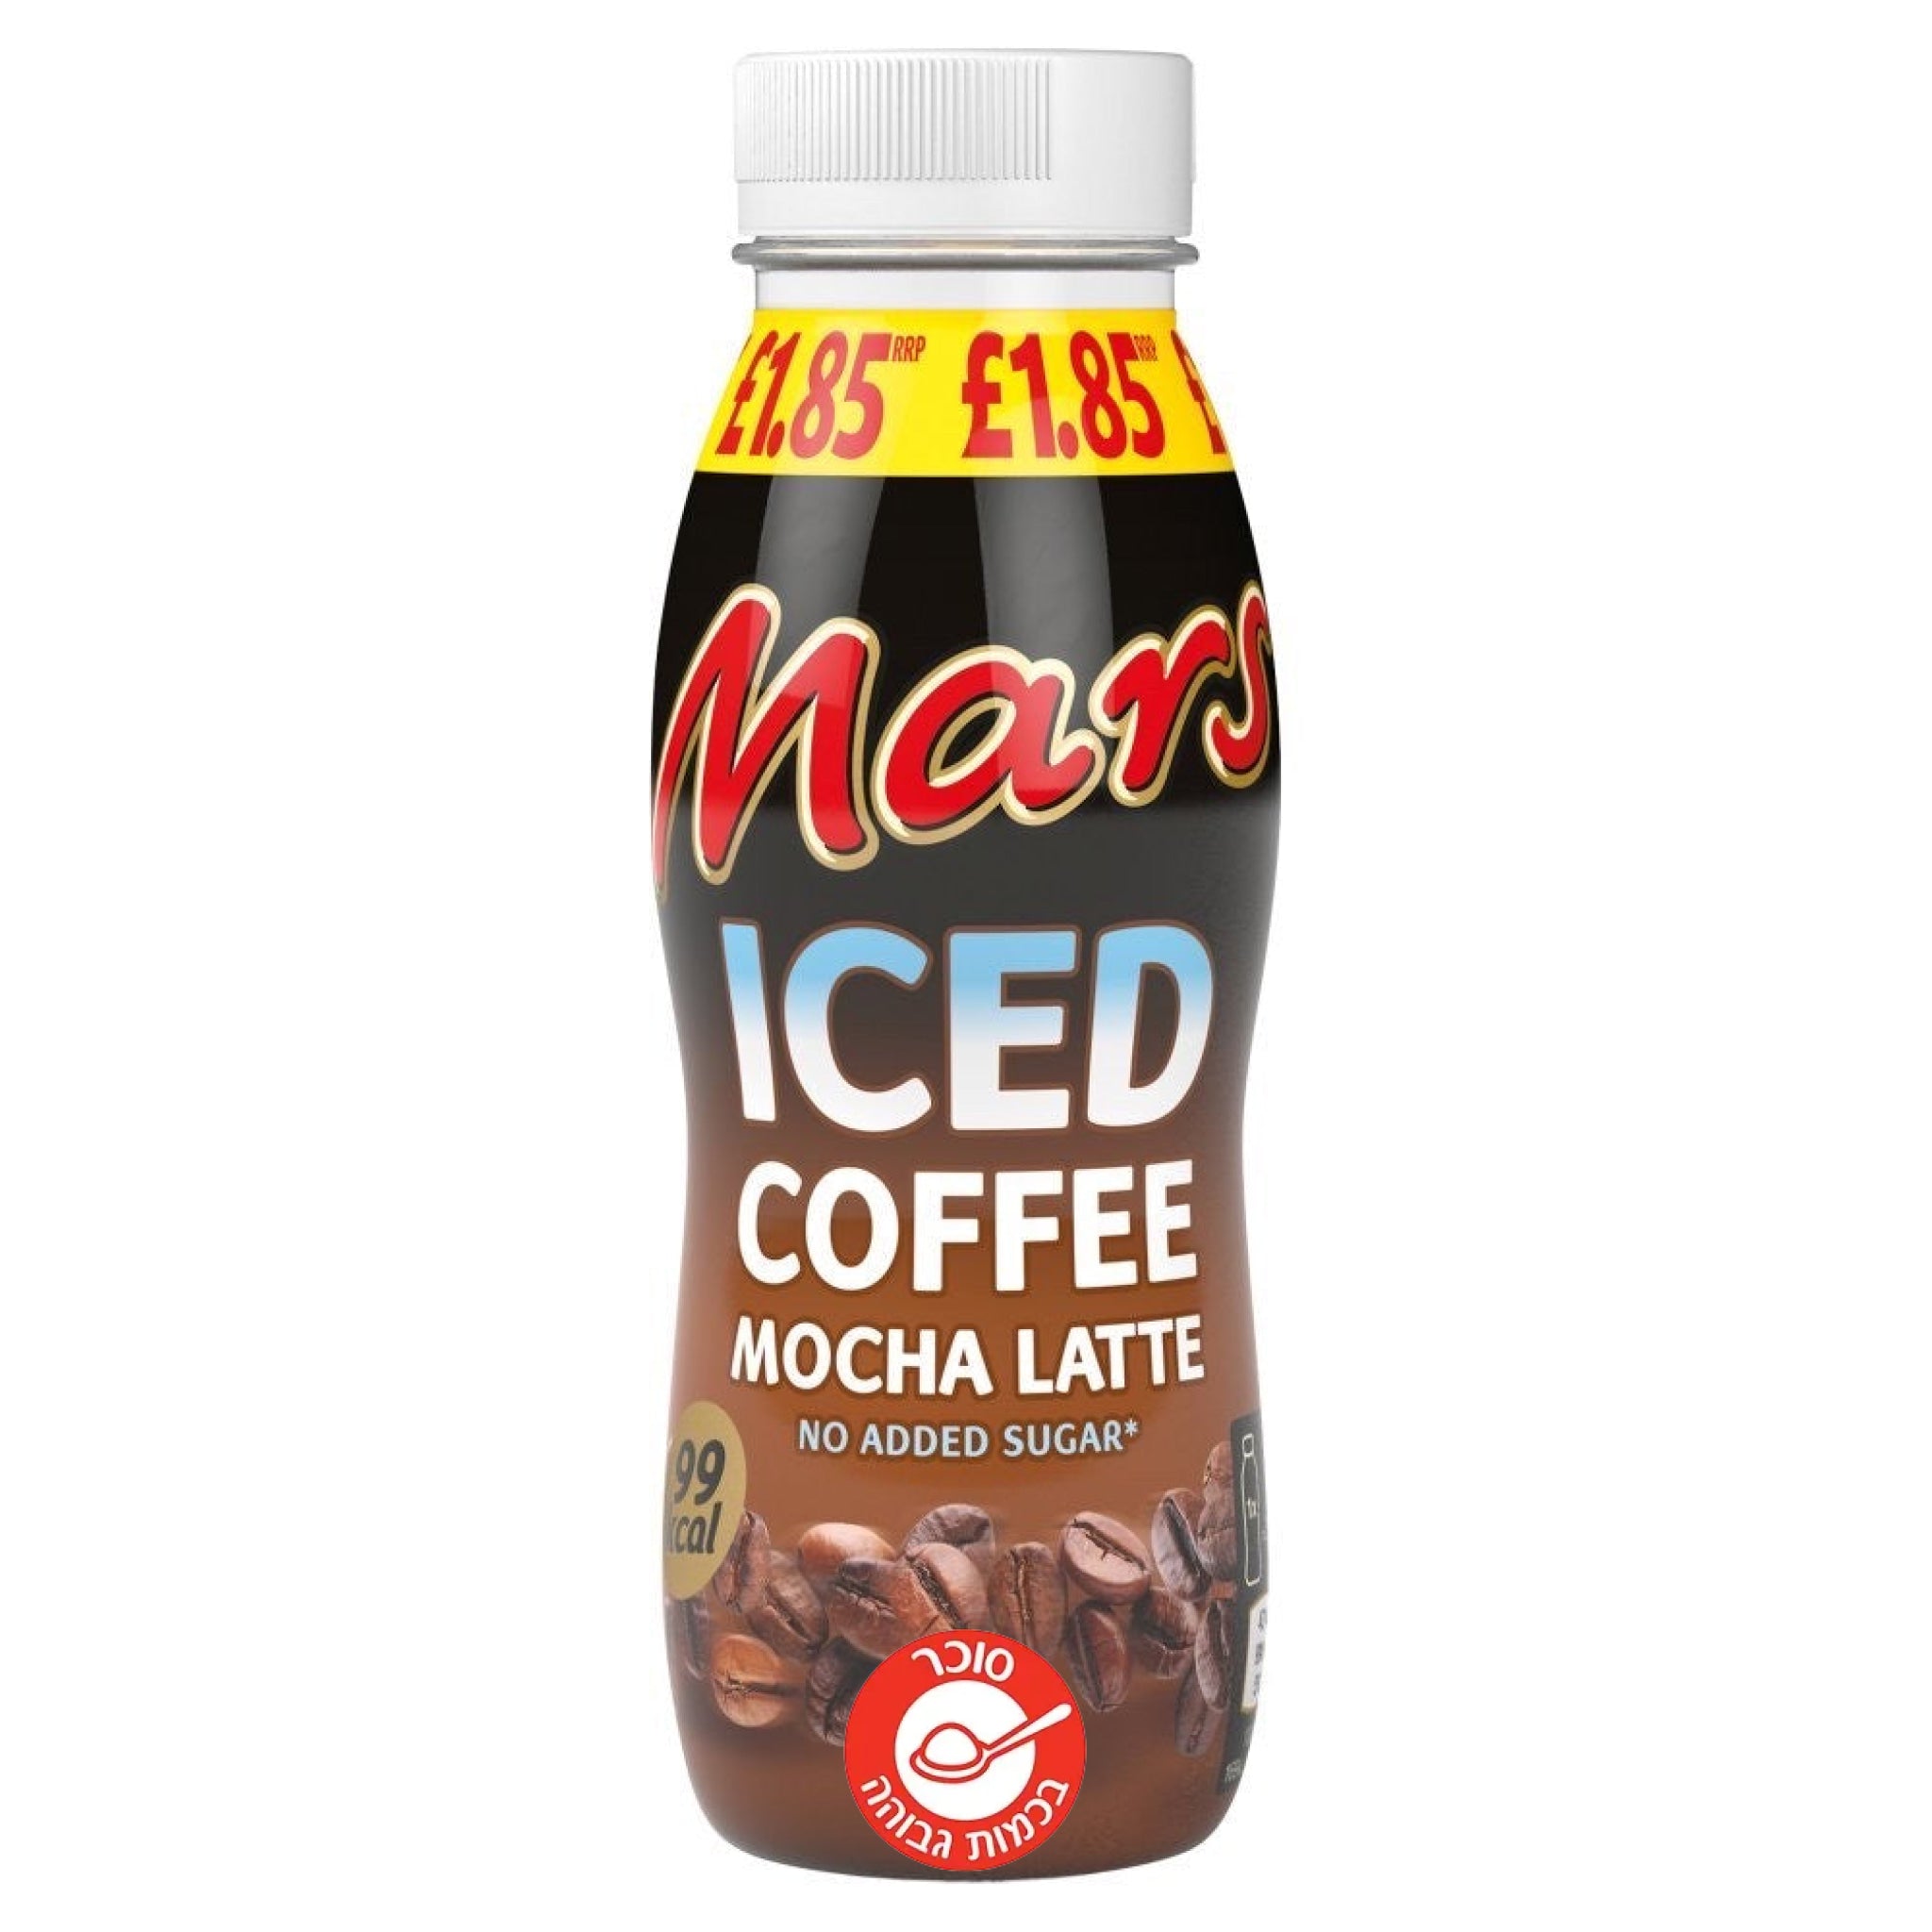 Mars Iced Coffee Mocha Latte - קפה לאטה משקה מארס שתיה